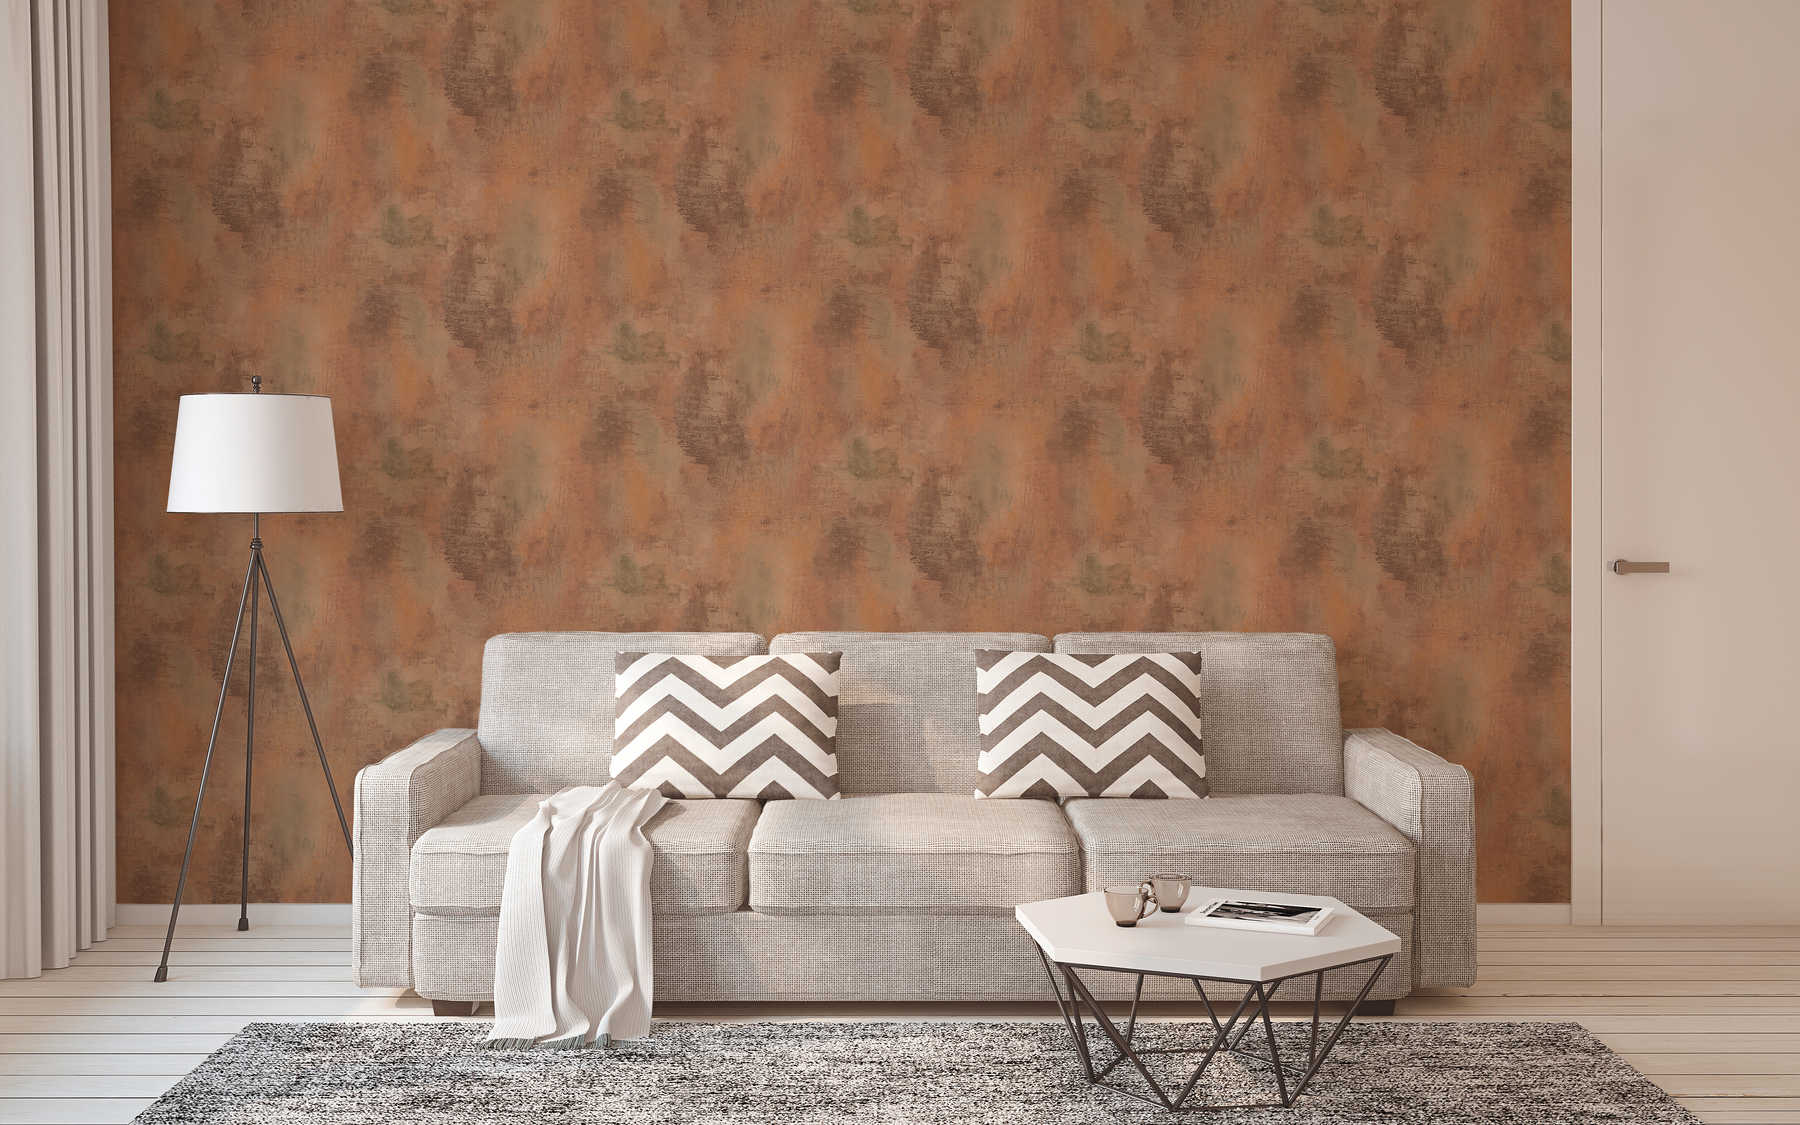             Wallpaper with rust pattern and metallic look - brown, orange, grey
        